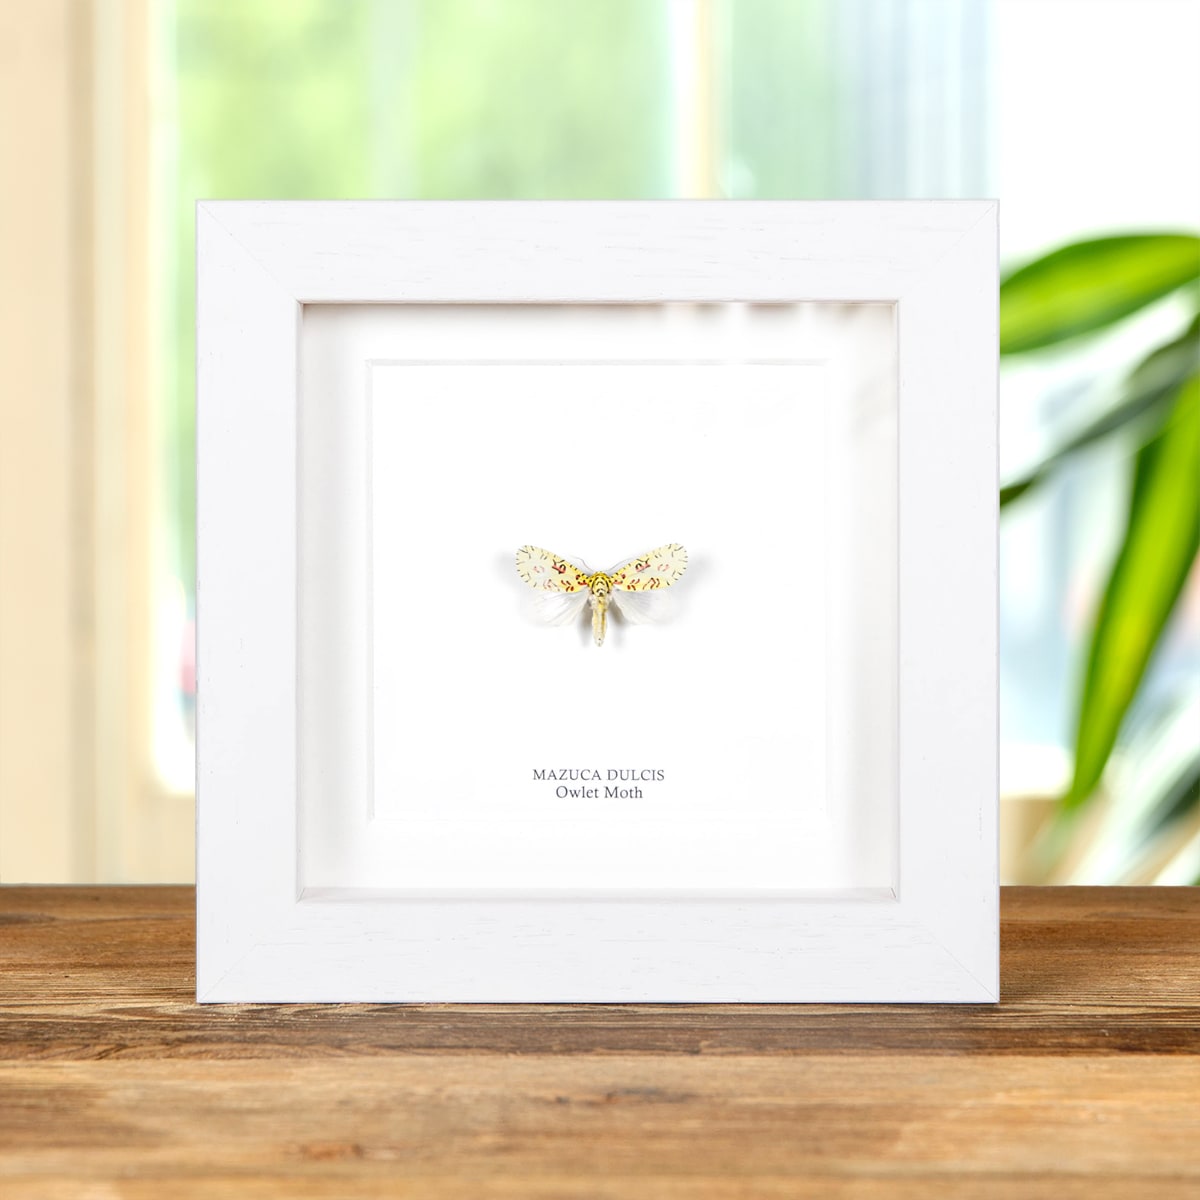 Owlet Moth In Box Frame (Mazuca dulcis)